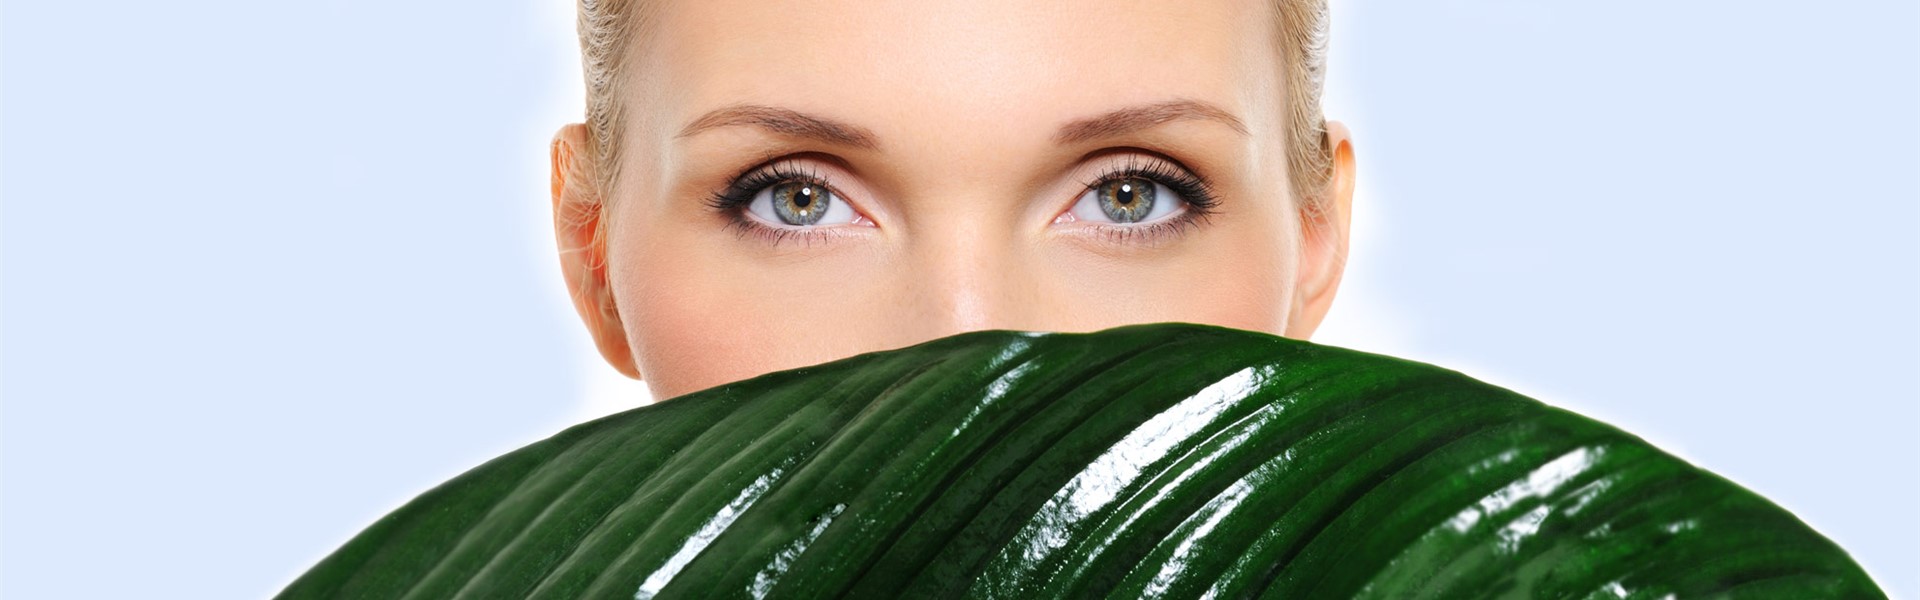 Skin 2 Skin's Revitalizing Eye Gel Beautiful Eyes